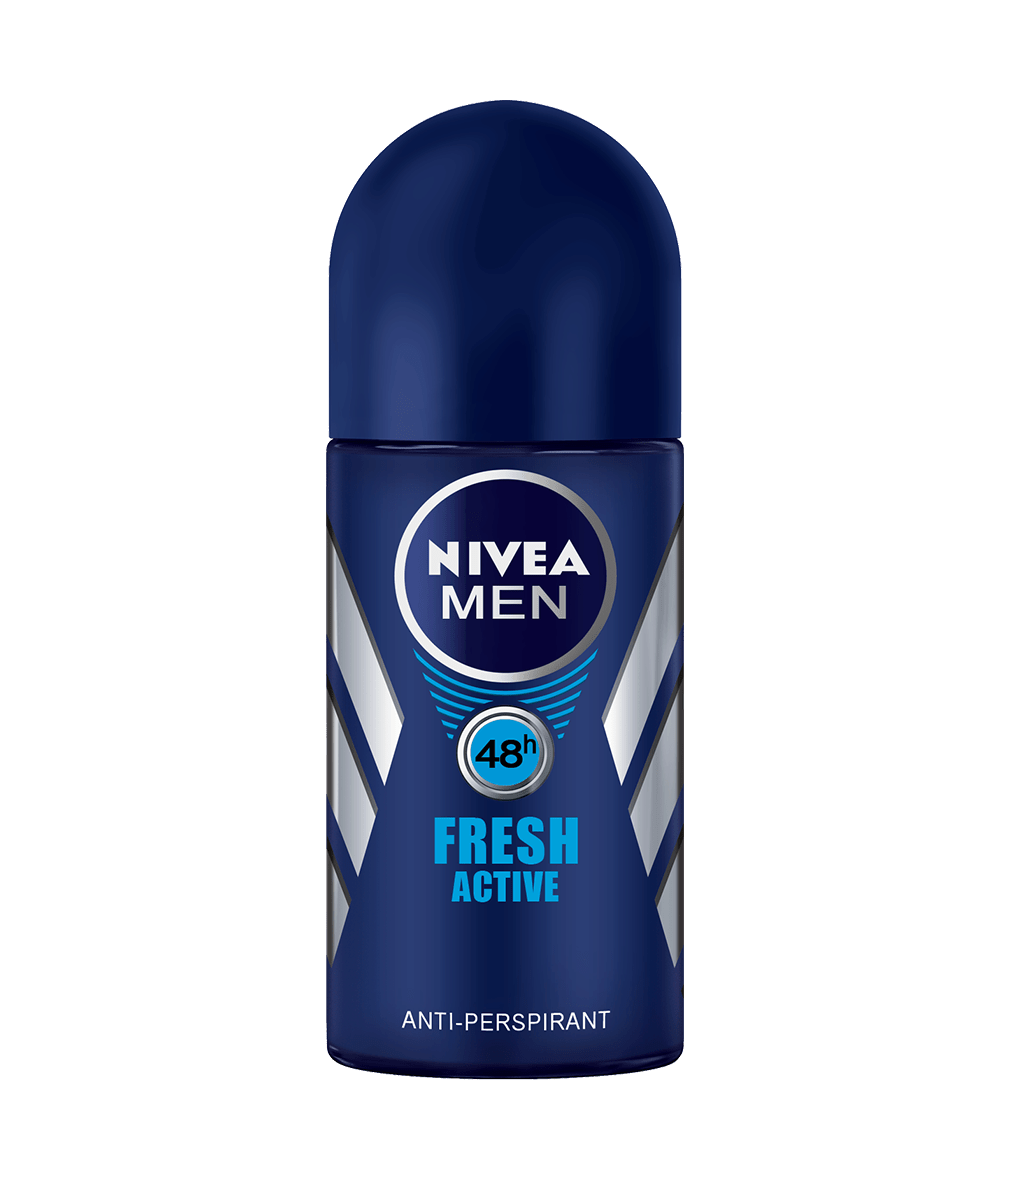 Deodorant Longlasting Freshness | NIVEA MEN Fresh